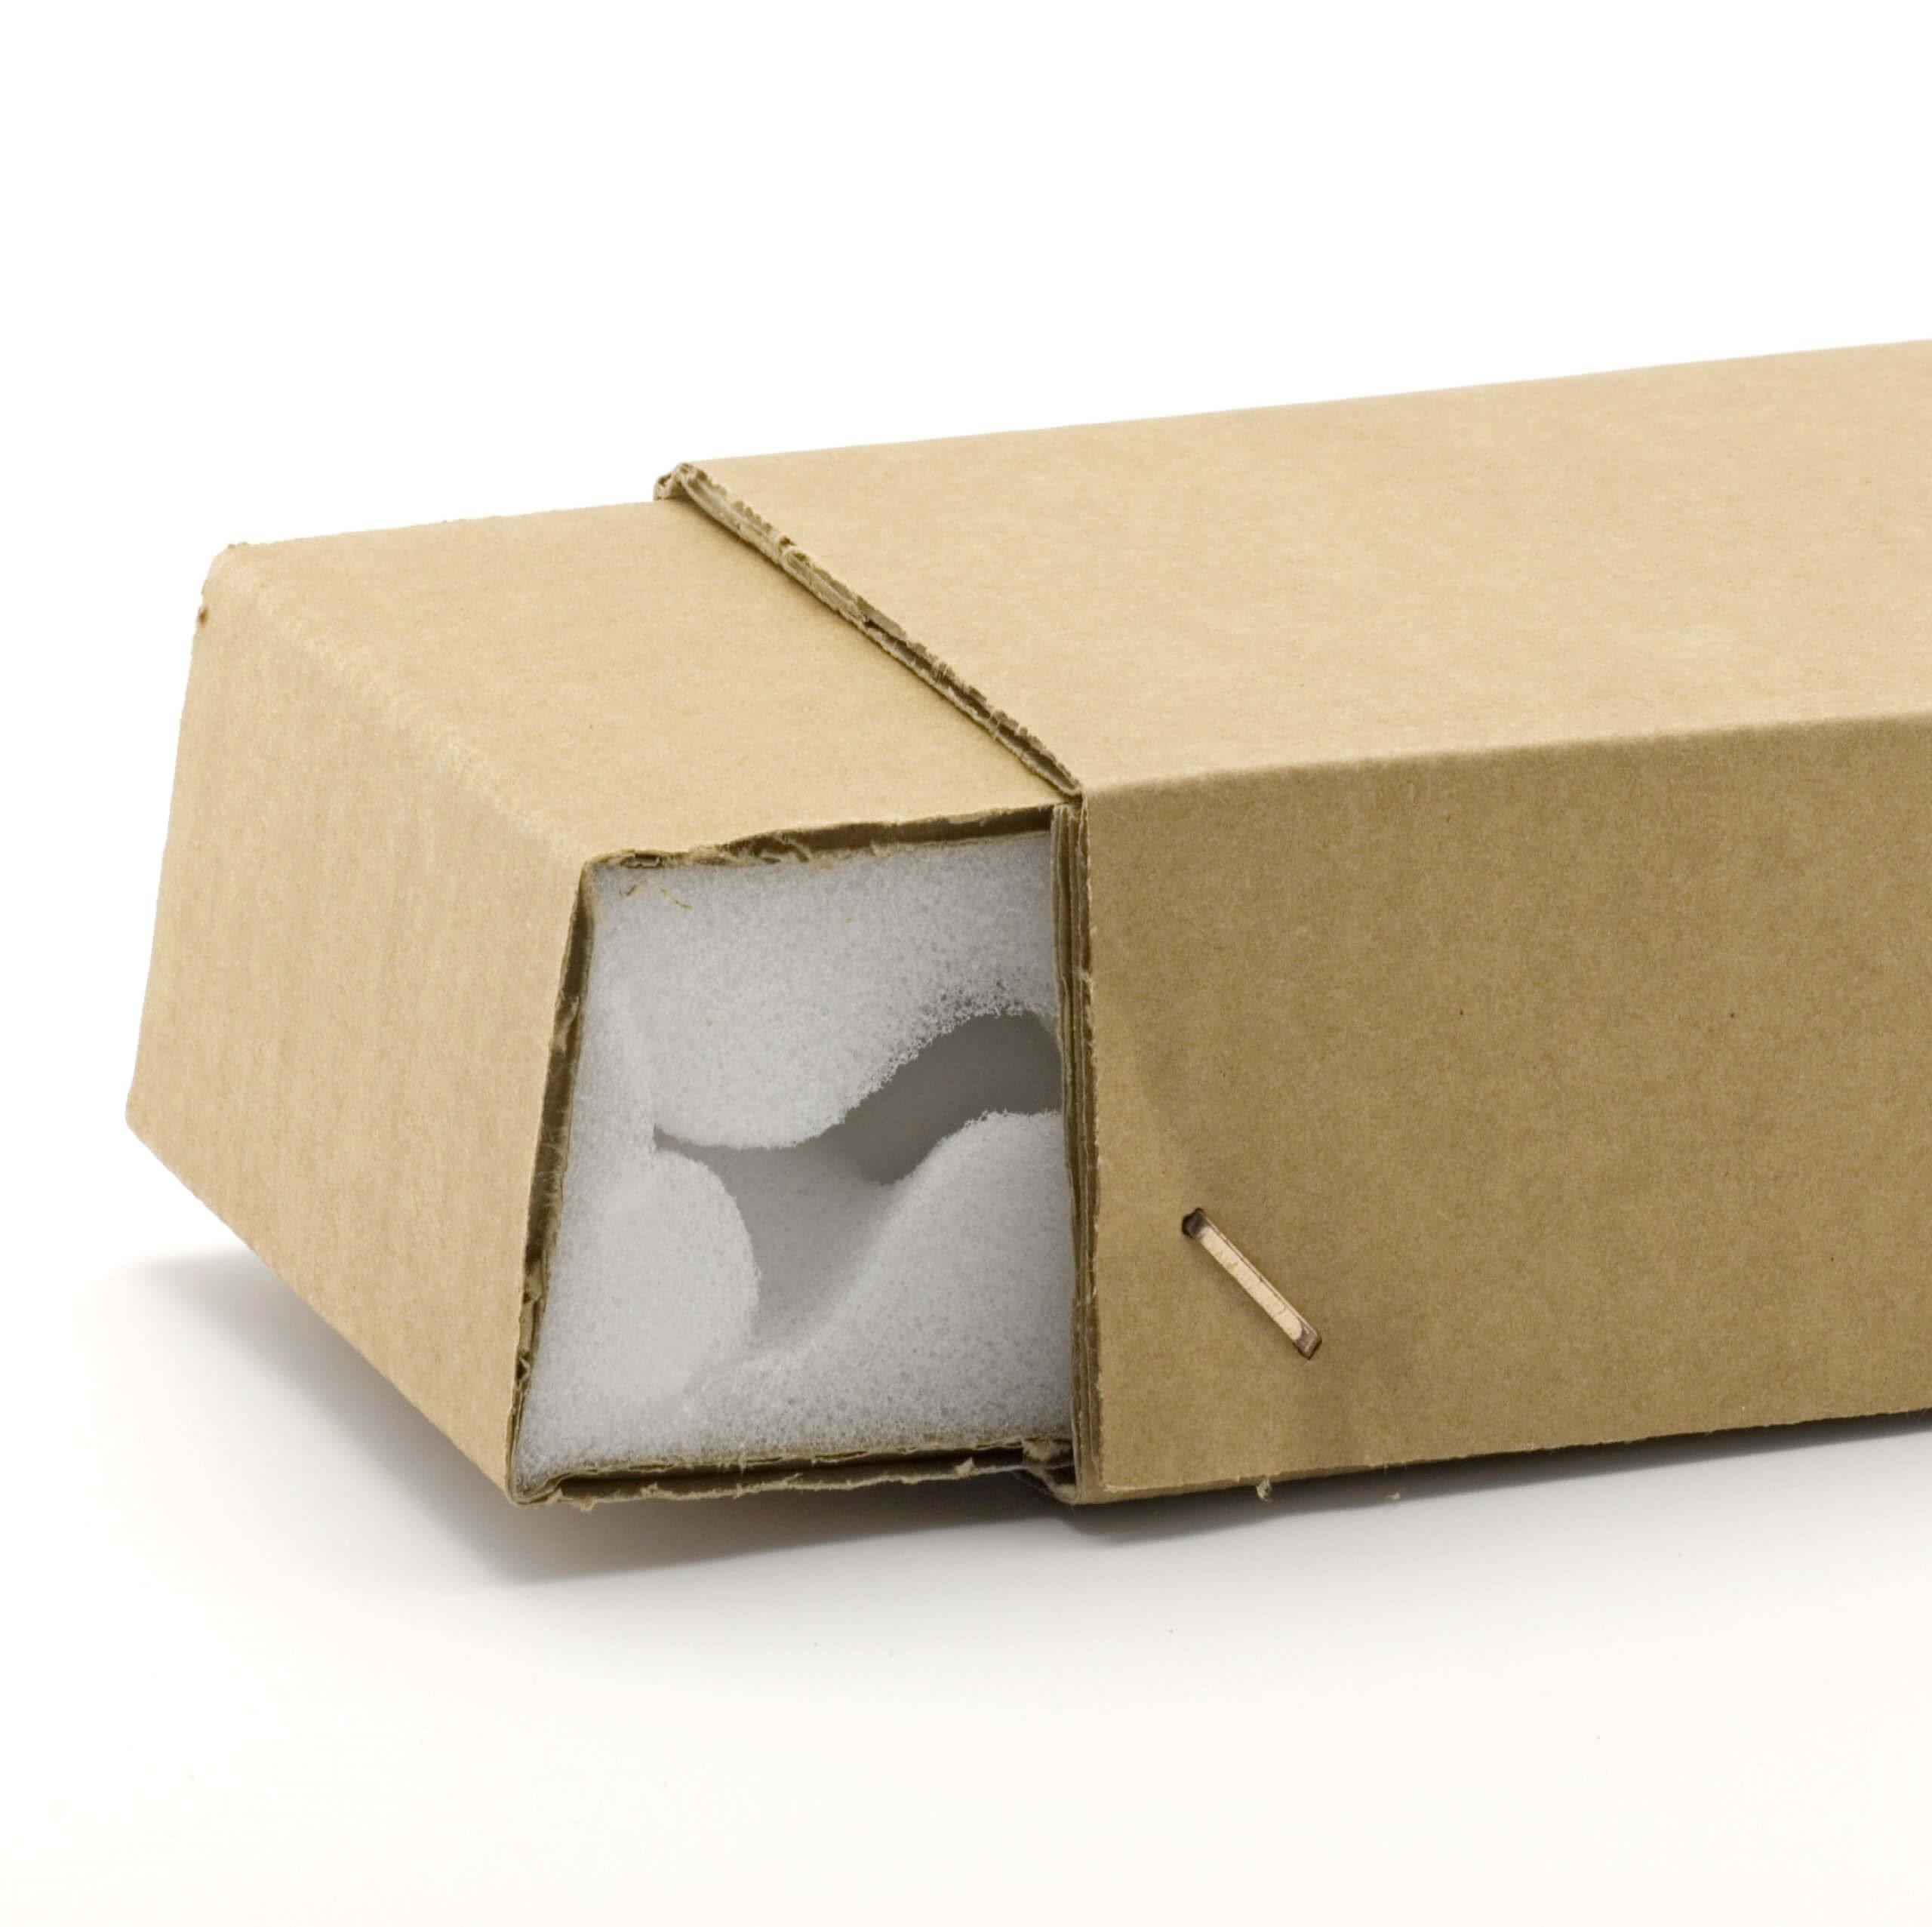 An image of a foam lined postal box.